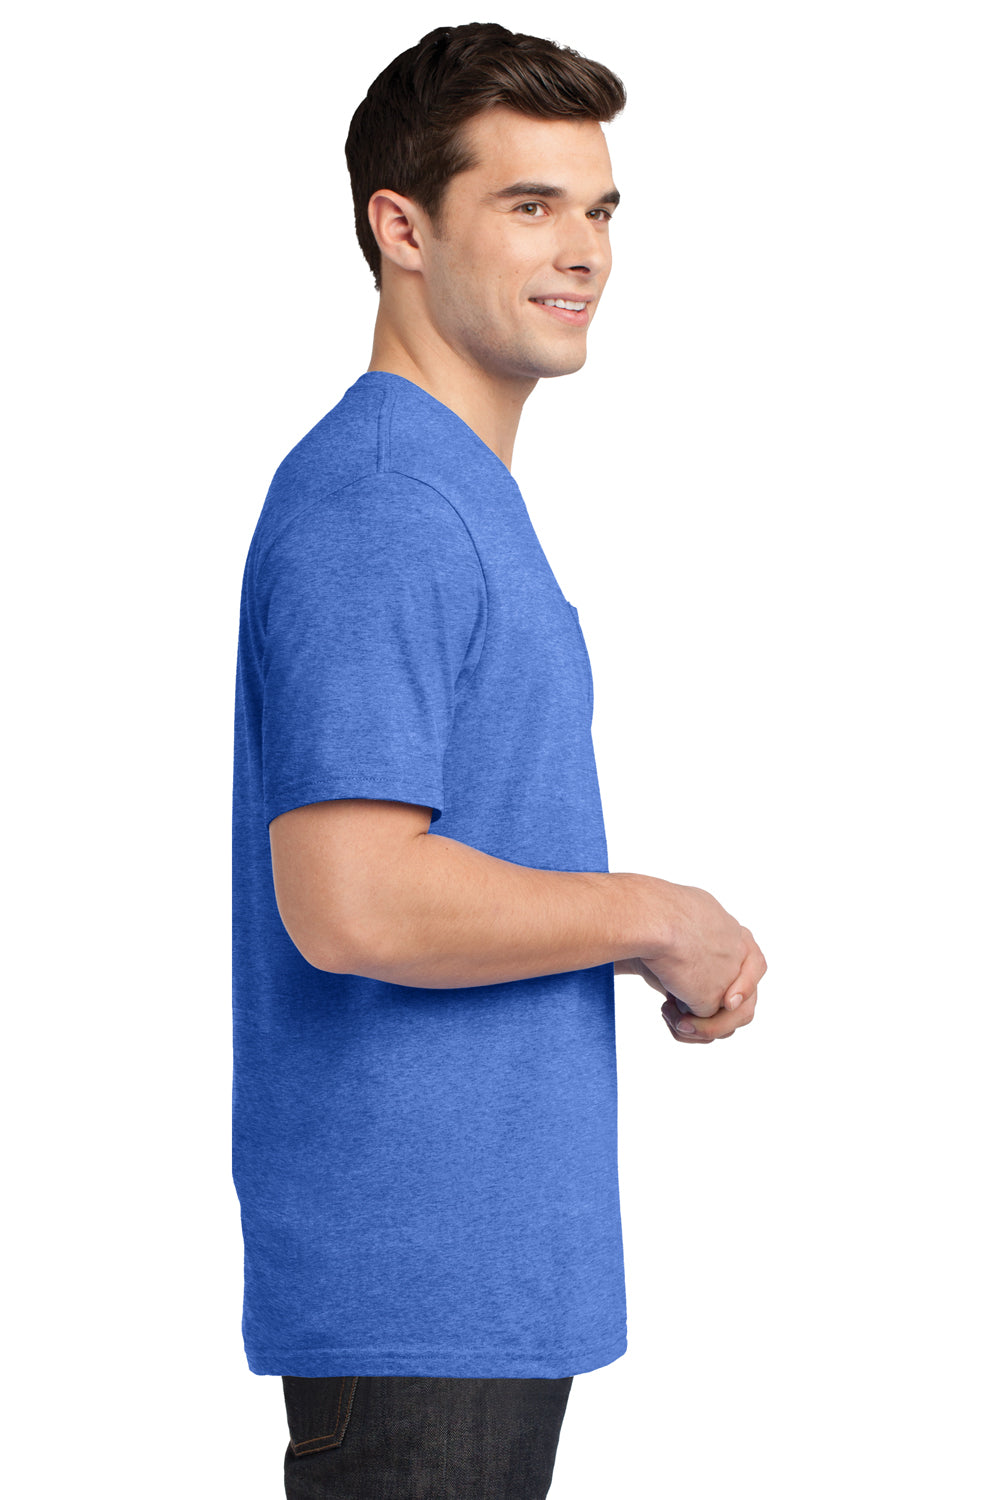 District DT6000P Mens Very Important Short Sleeve Crewneck T-Shirt w/ Pocket Heather Royal Blue Side